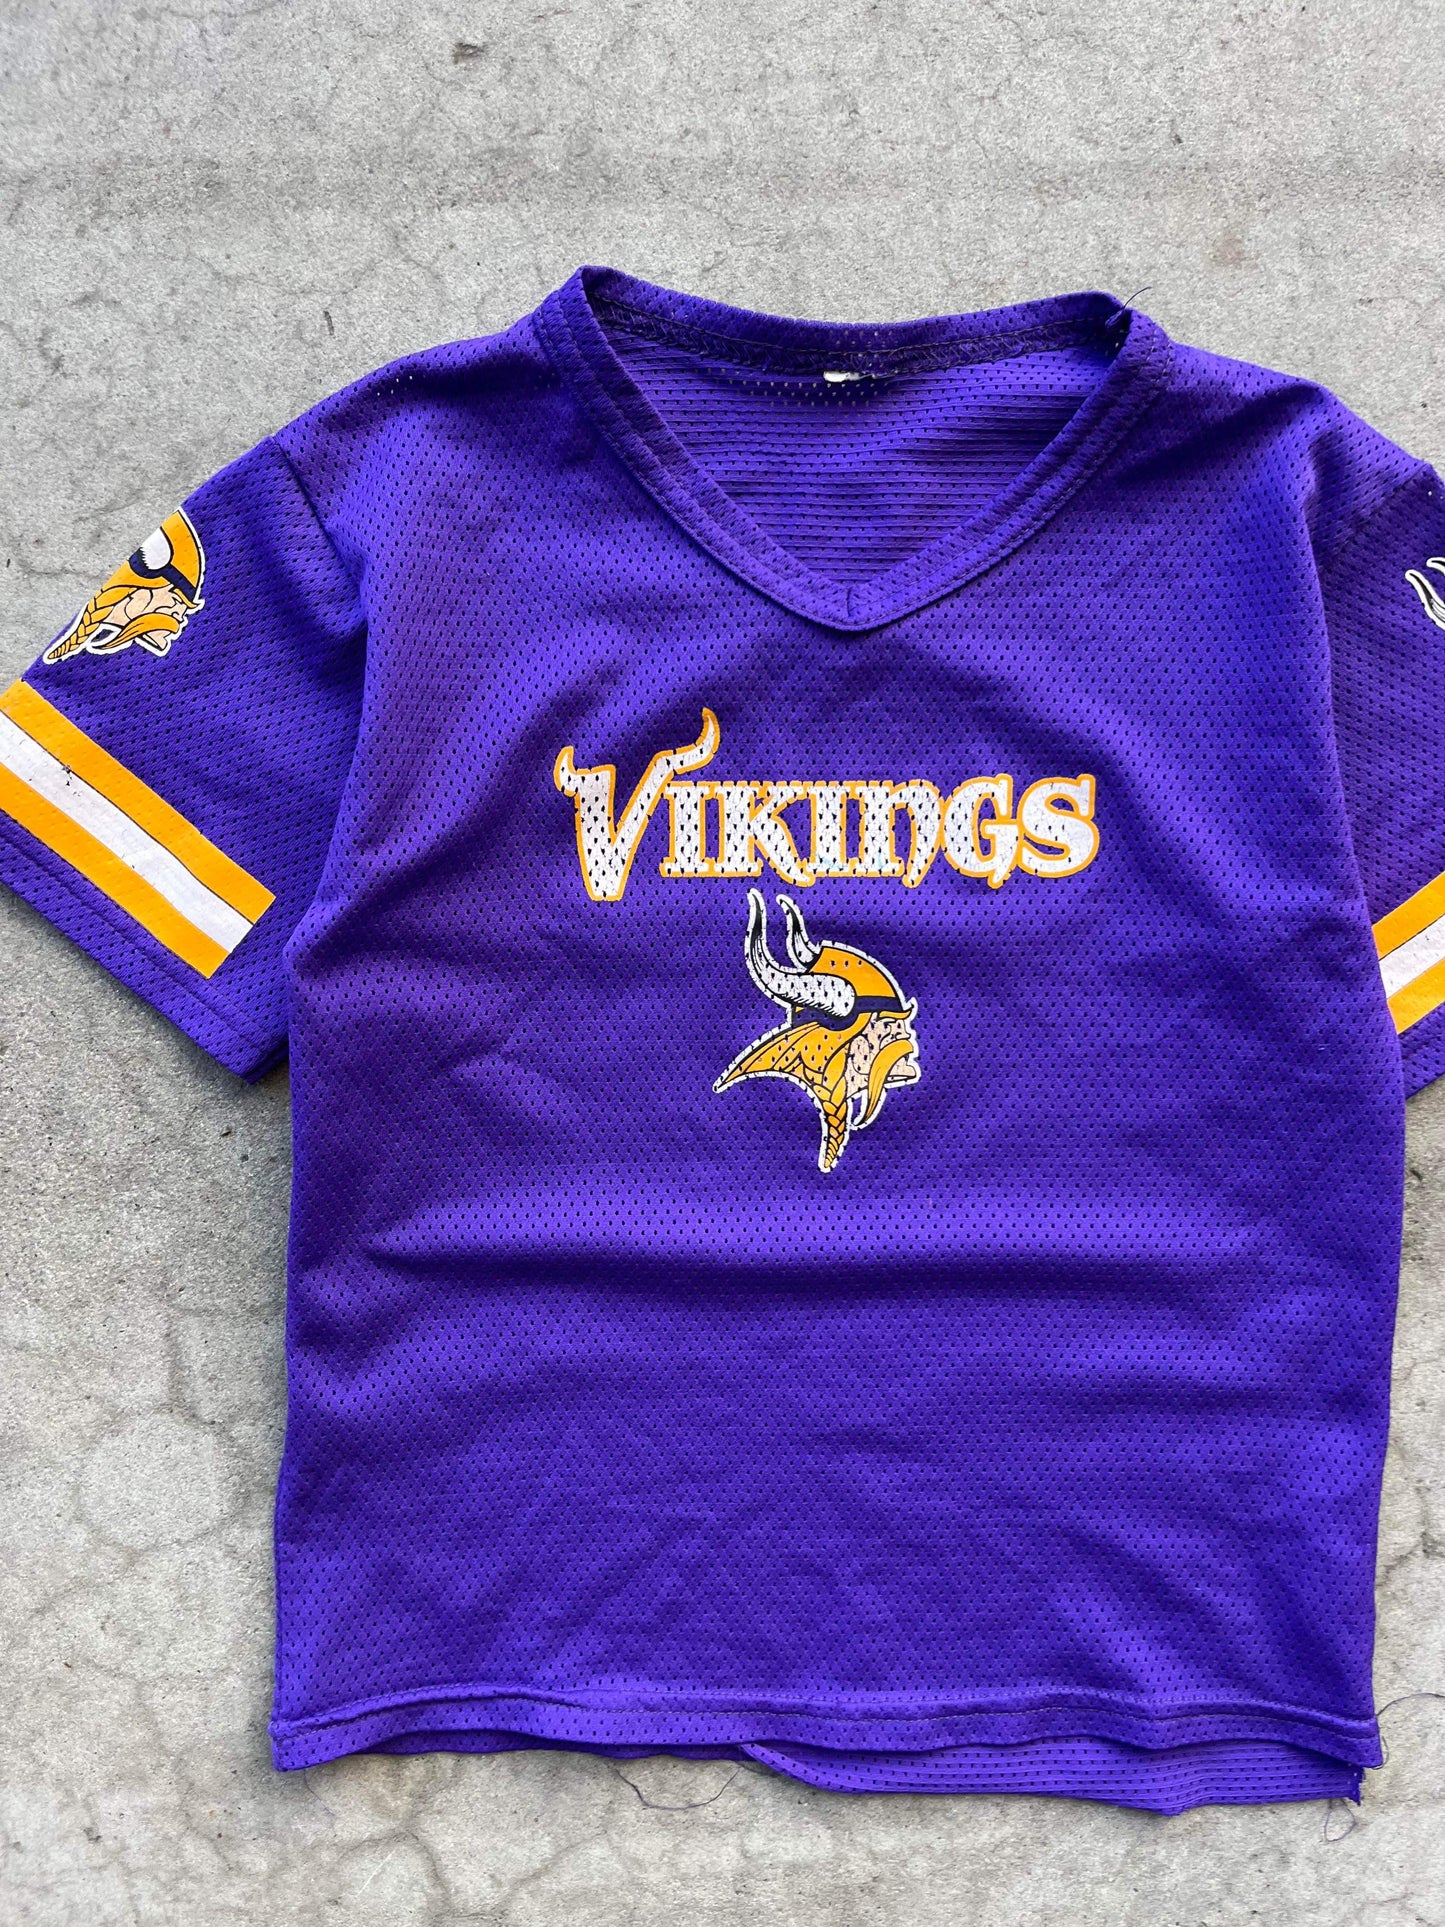 (XXS) Vintage Minnesota Vikings Baby Tee Style Jersey